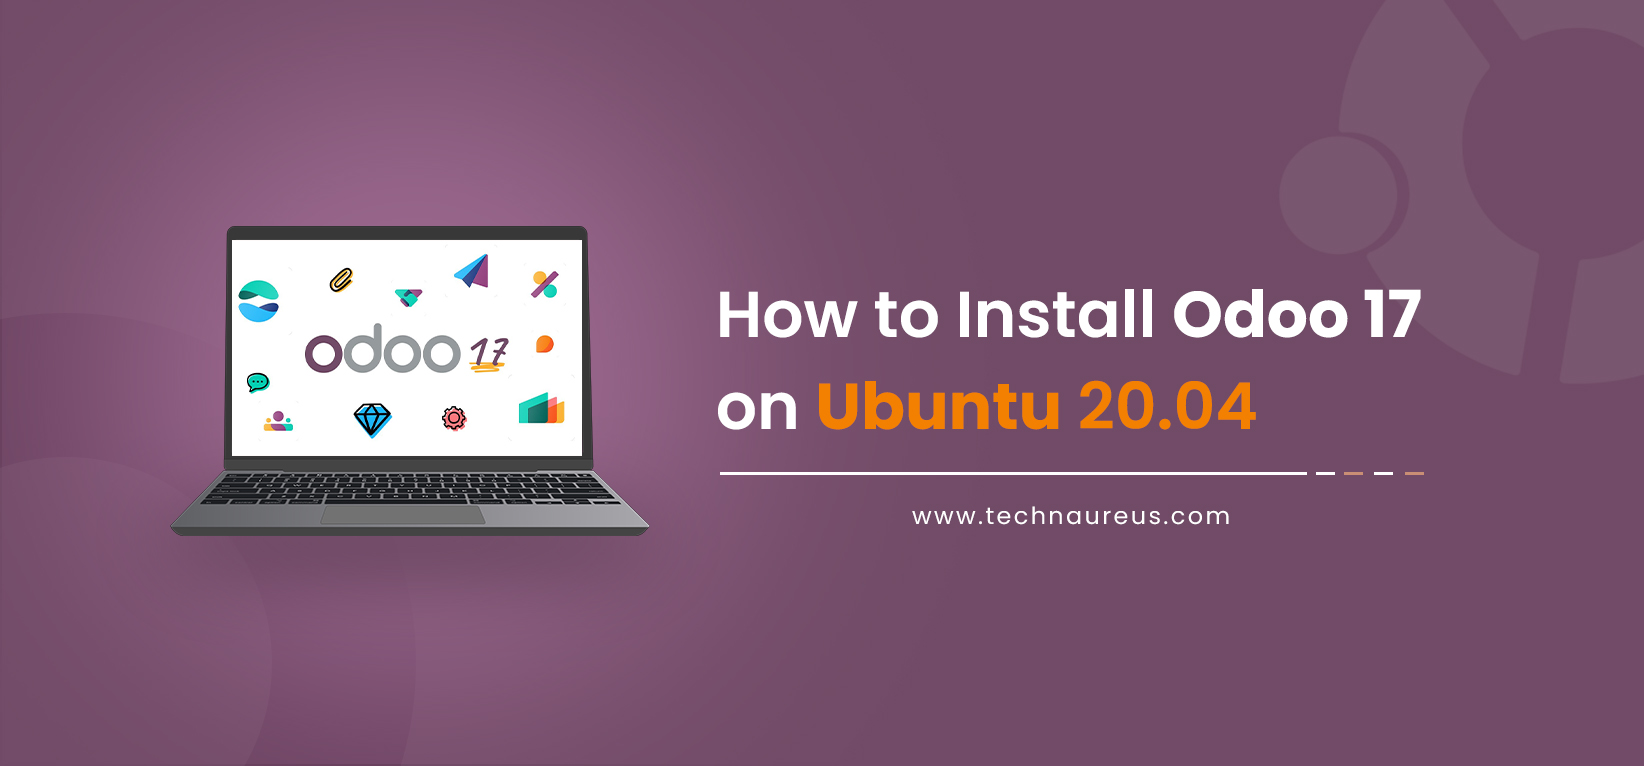 Install Odoo 17 on Ubuntu 20.04, odoo 17 installation on ubuntu, odoo 17 installation, odoo 17 installation on ubuntu 20.04